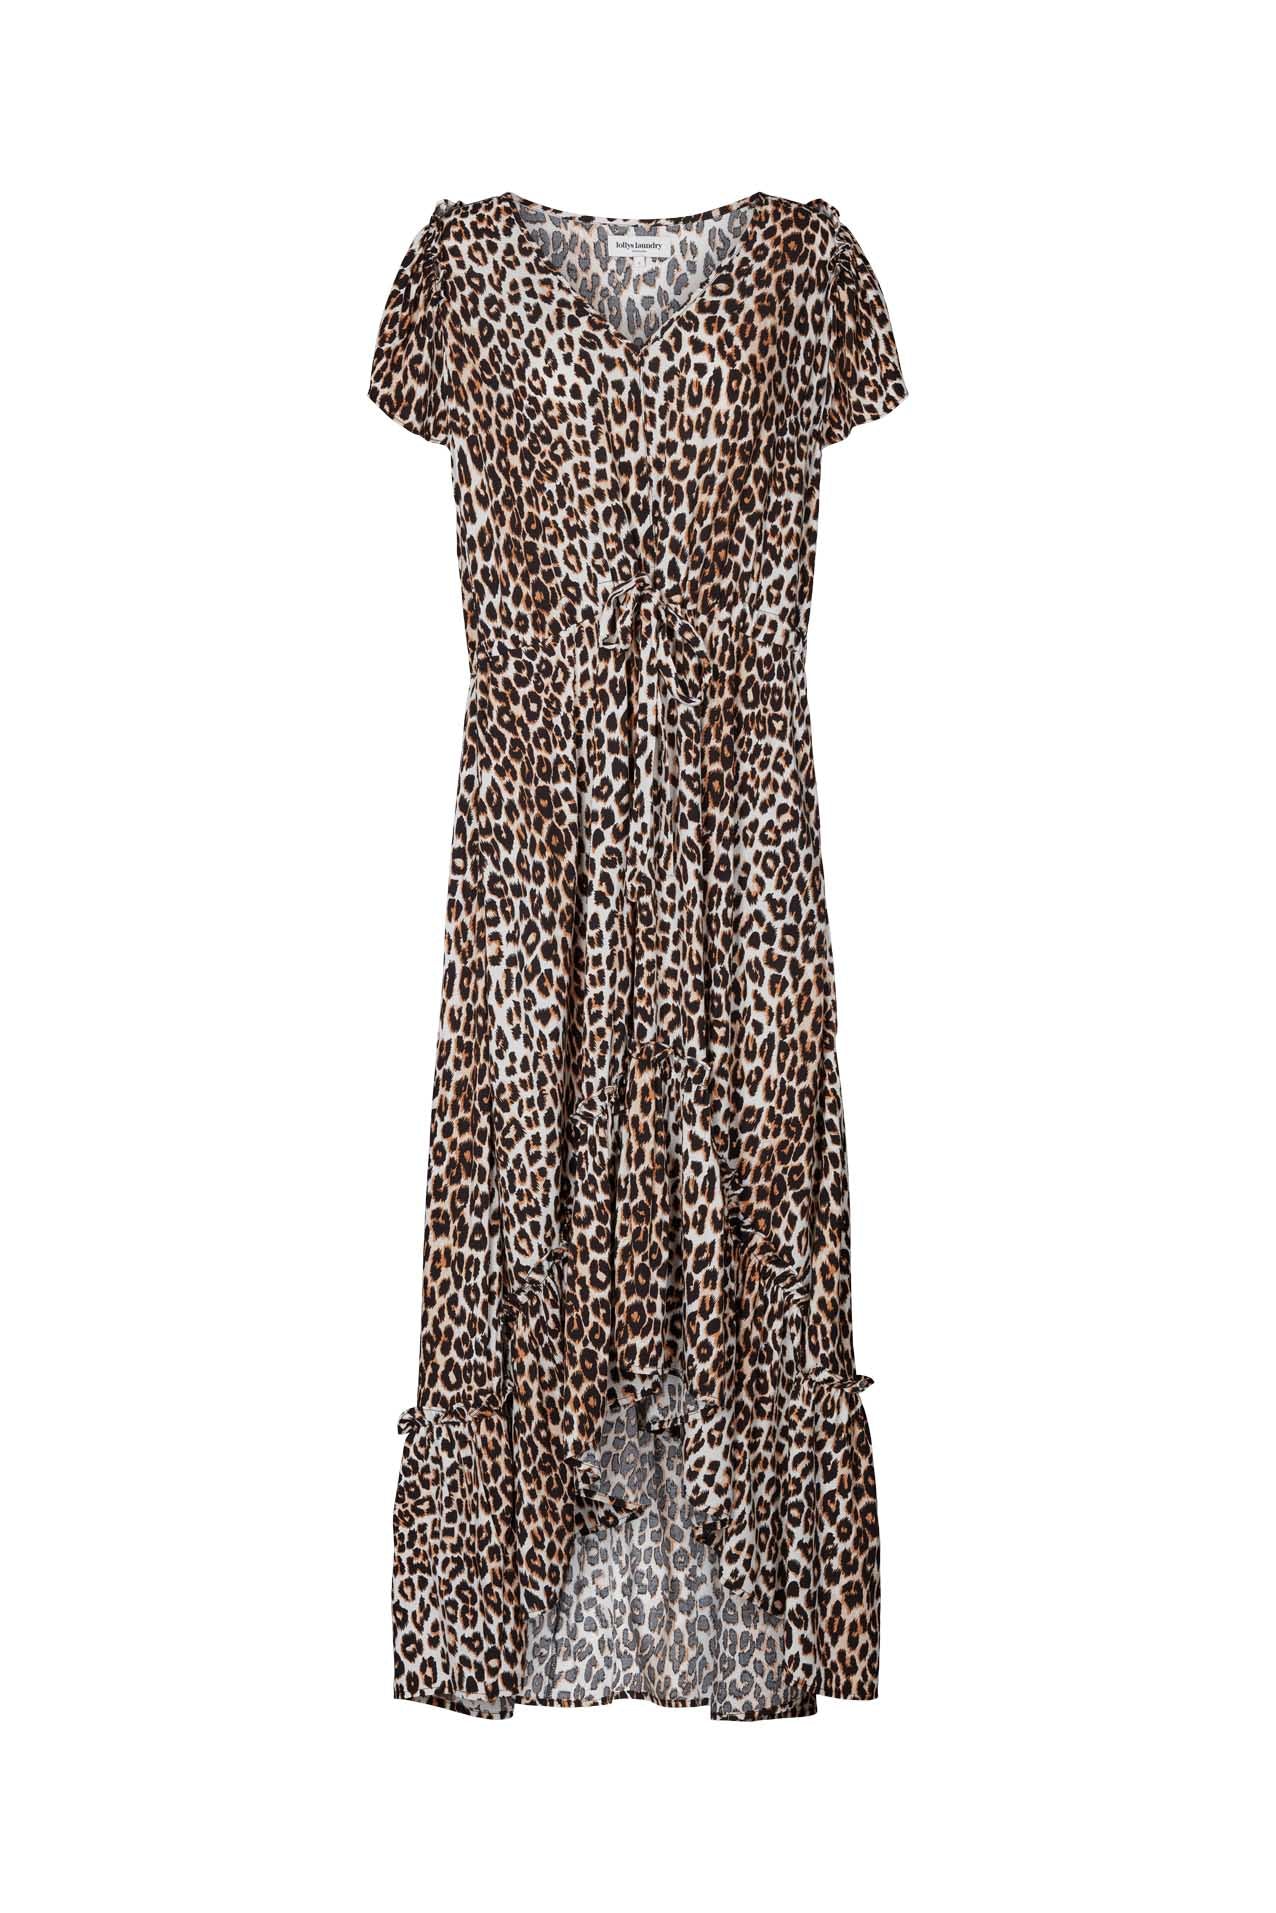 Lollys Laundry Odessa Dress Dress 72 Leopard Print